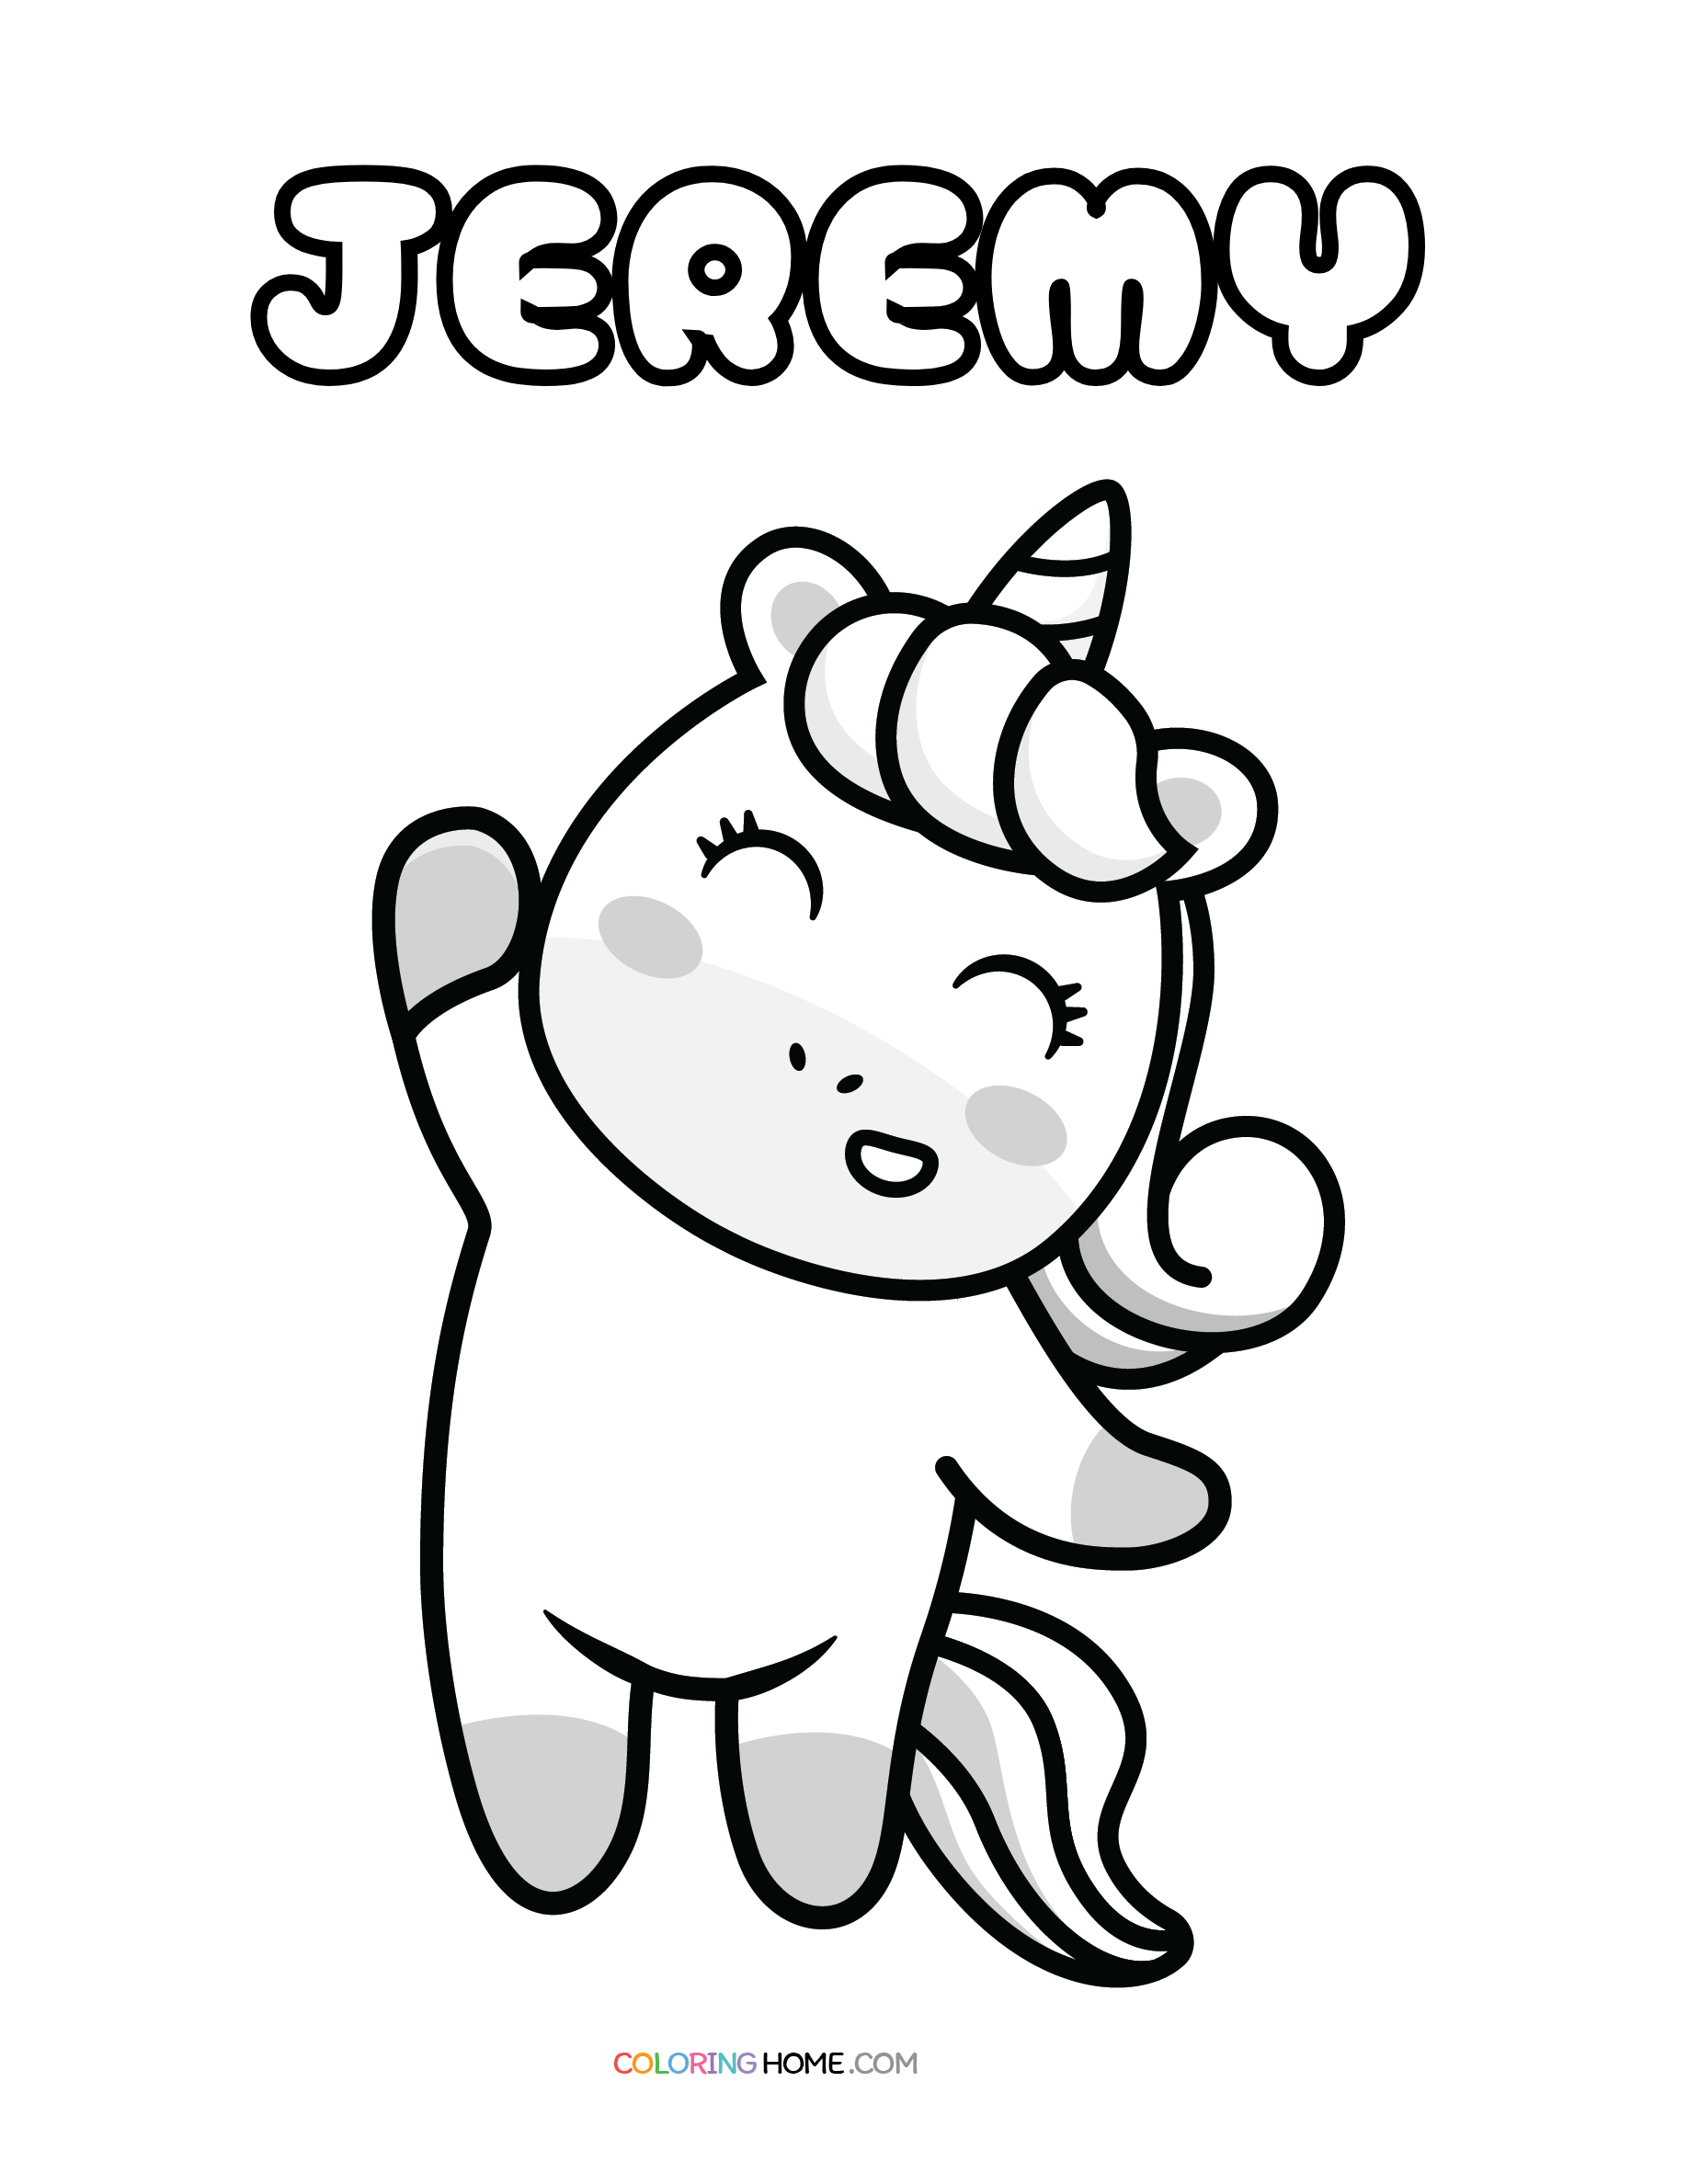 Jeremy unicorn coloring page